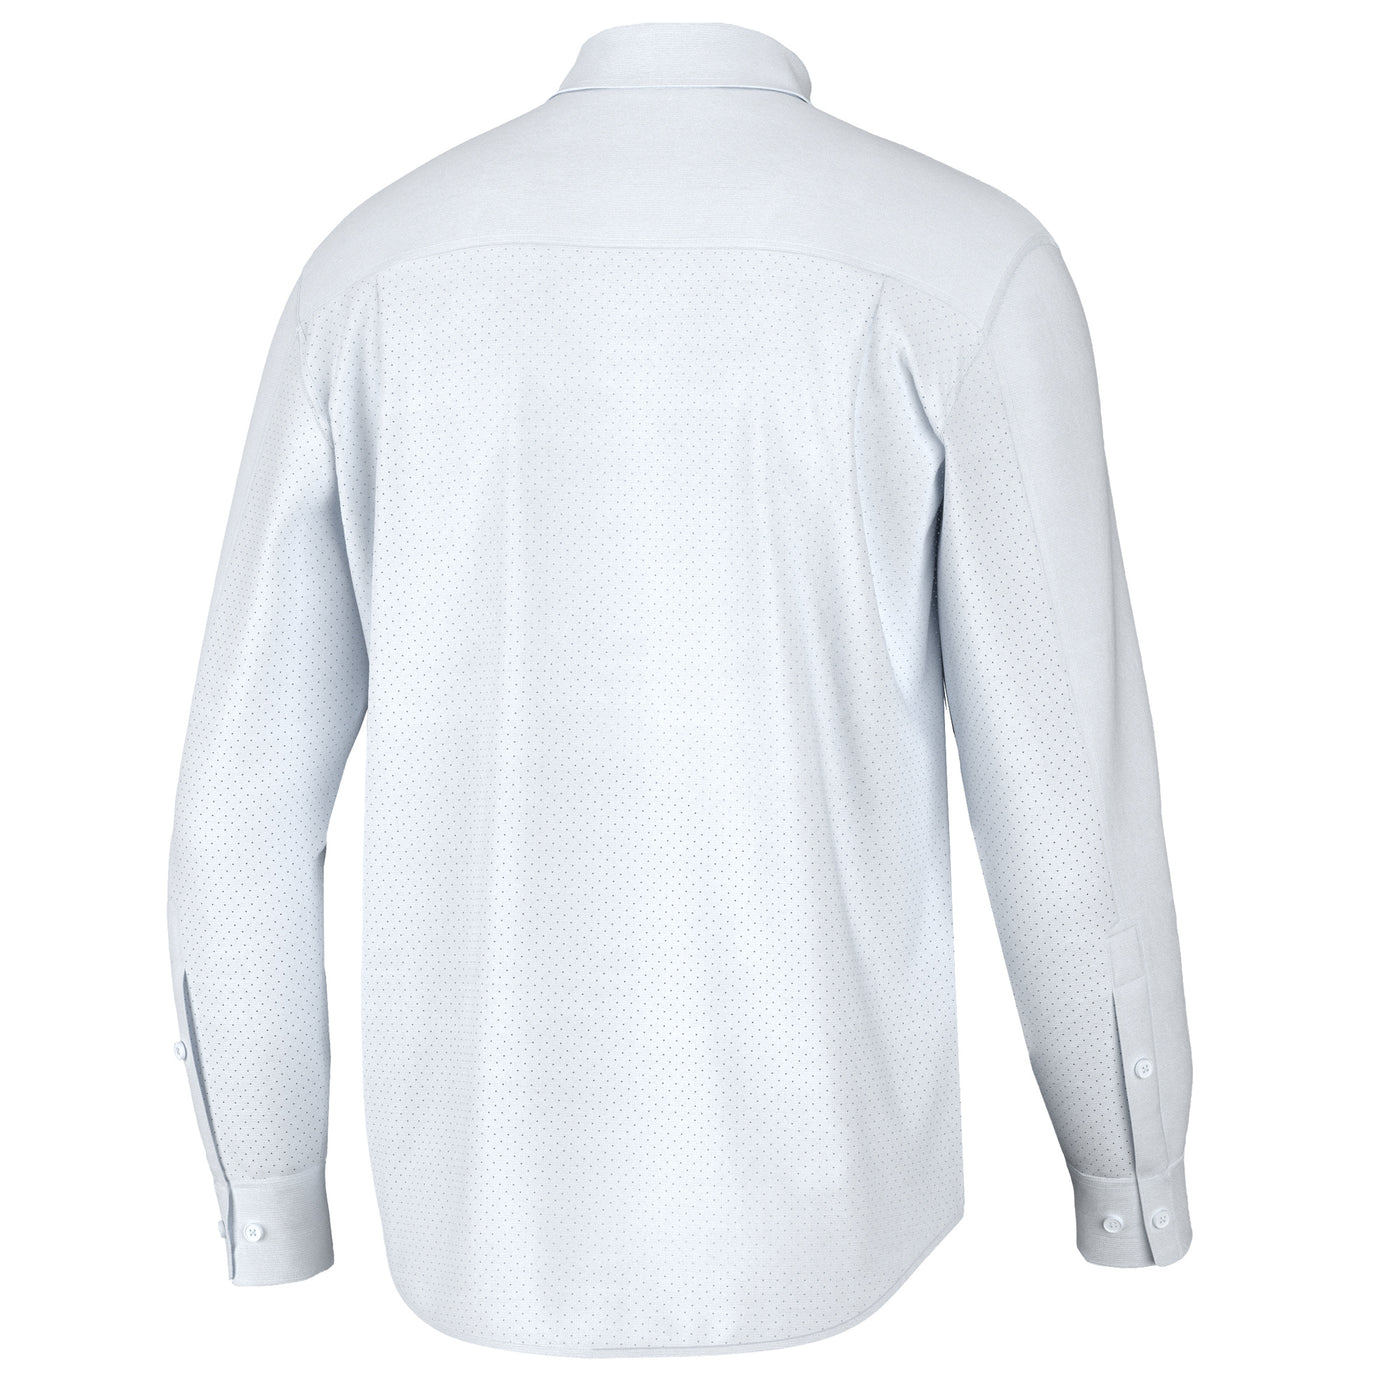 Huk Men's Tide Point Long Sleeve Shirt, Medium, Sargasso Sea